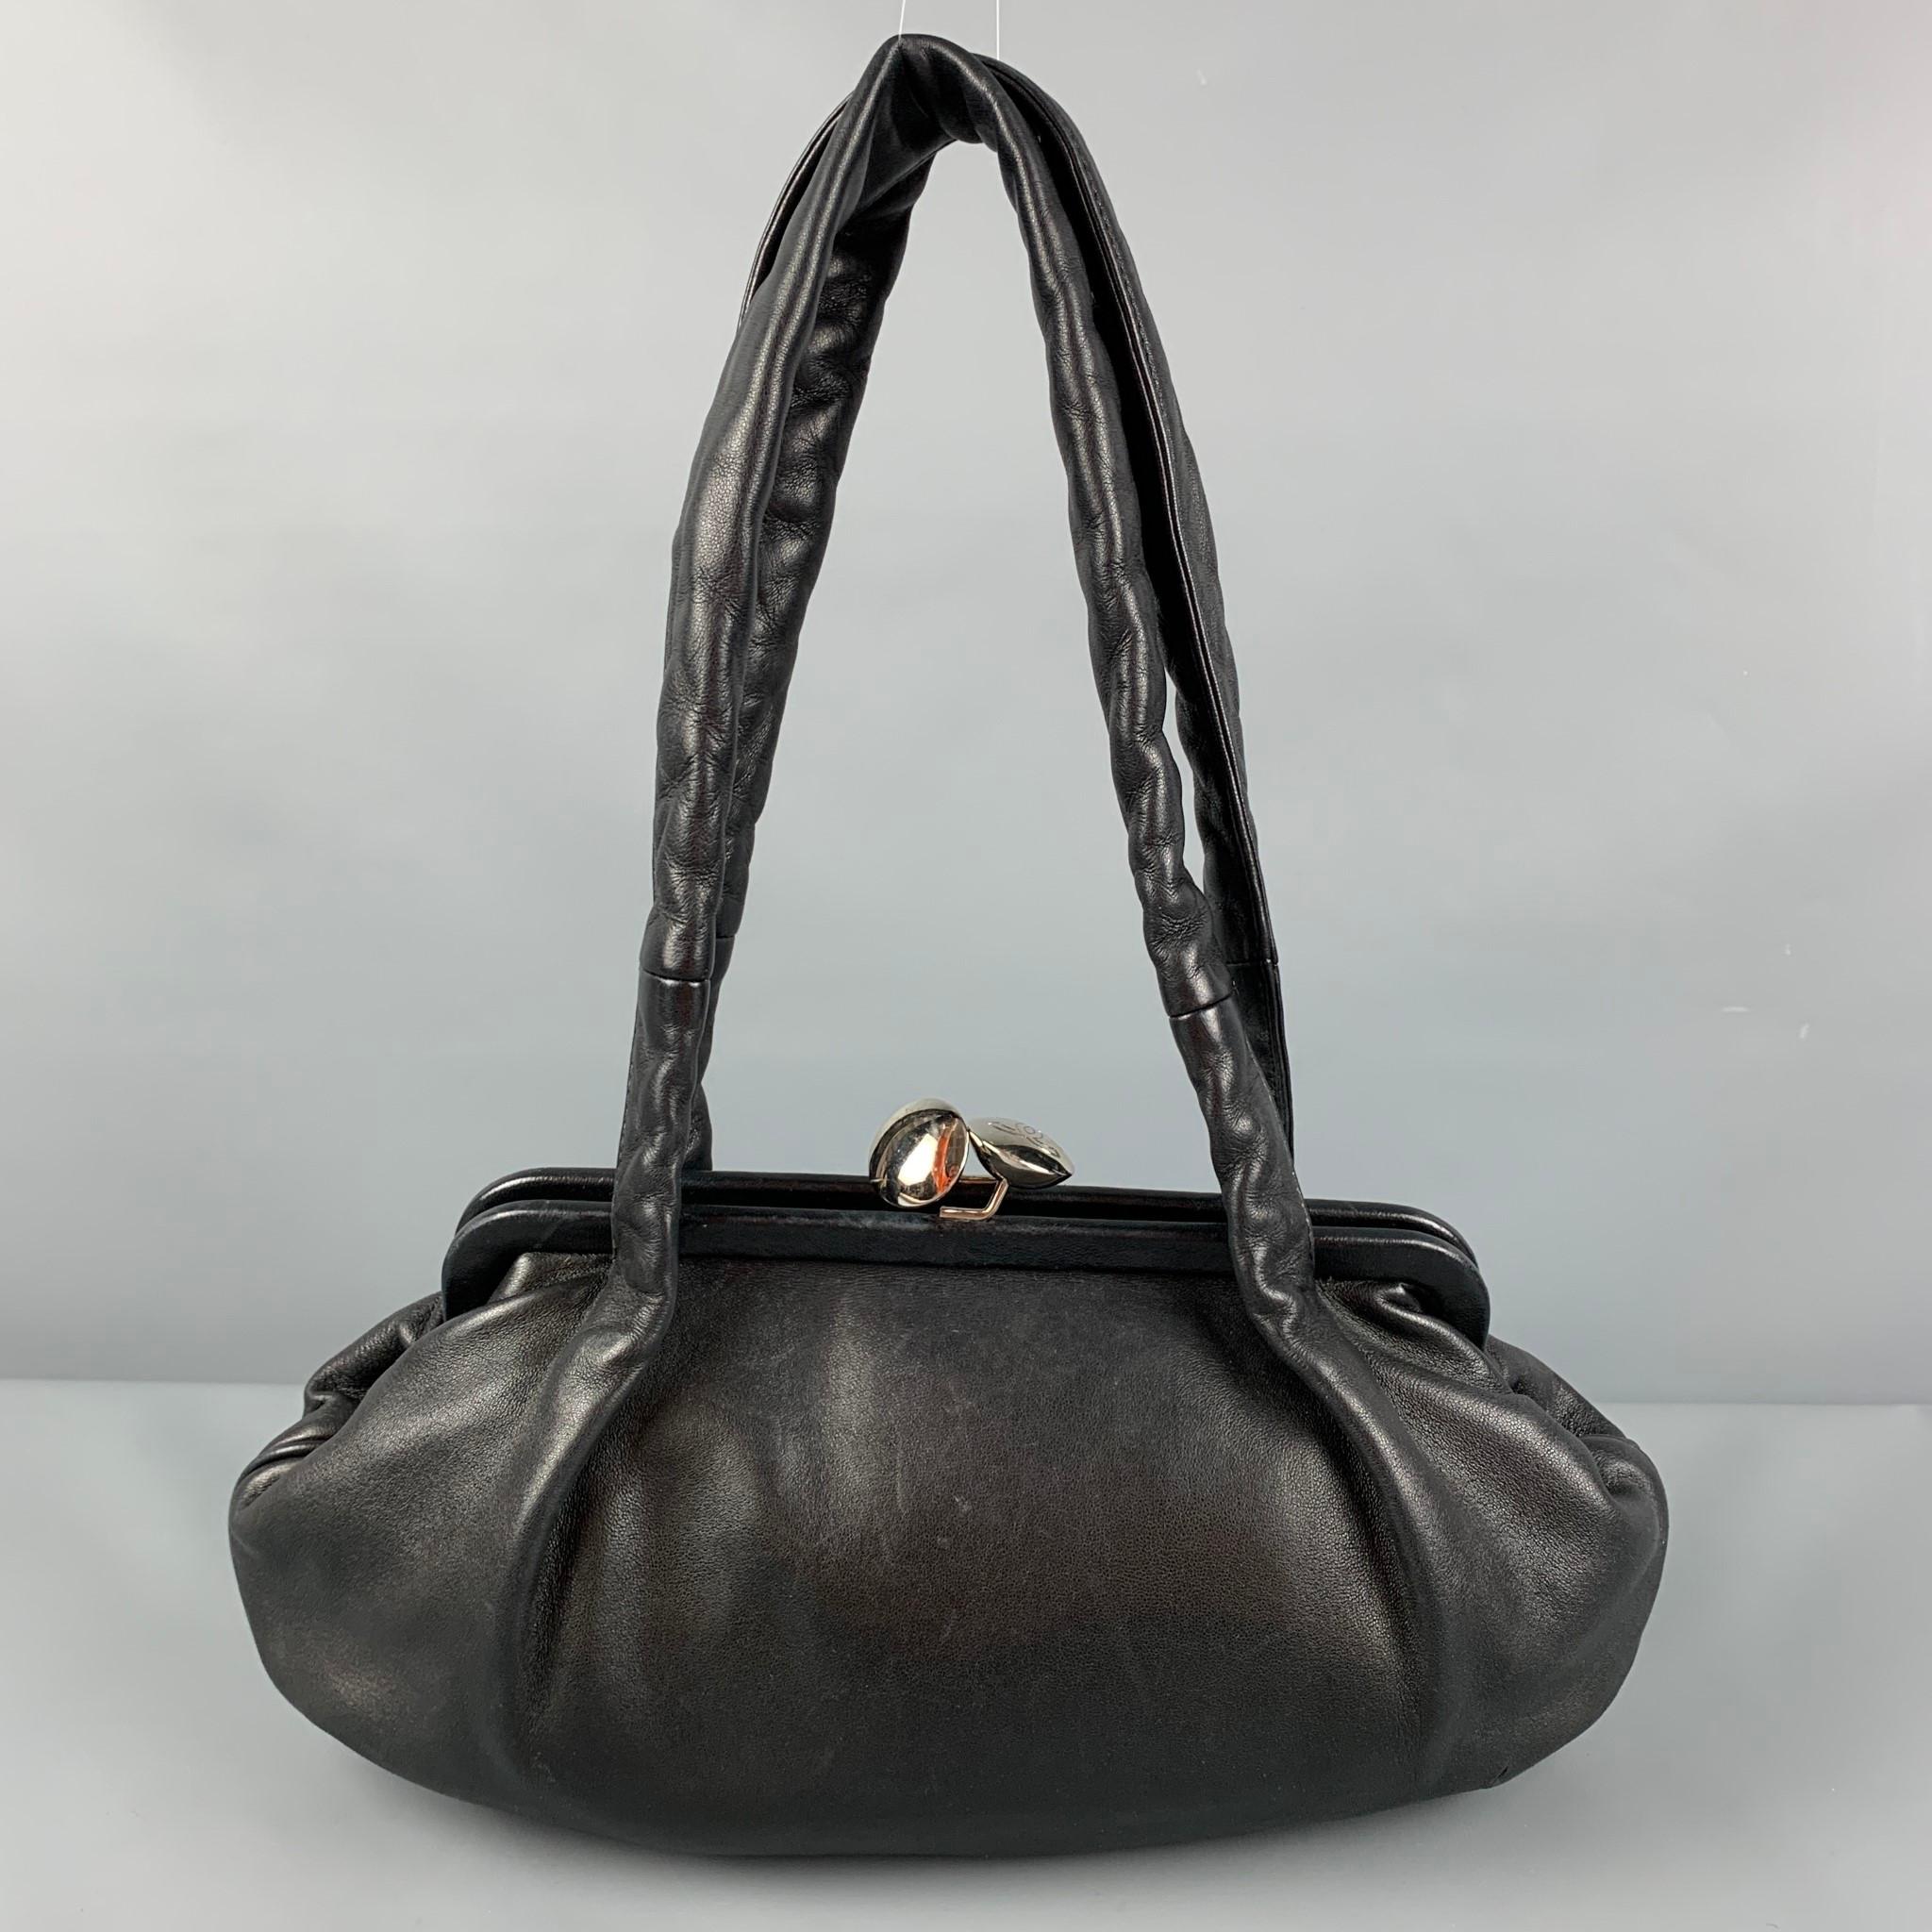 chanel black satchel